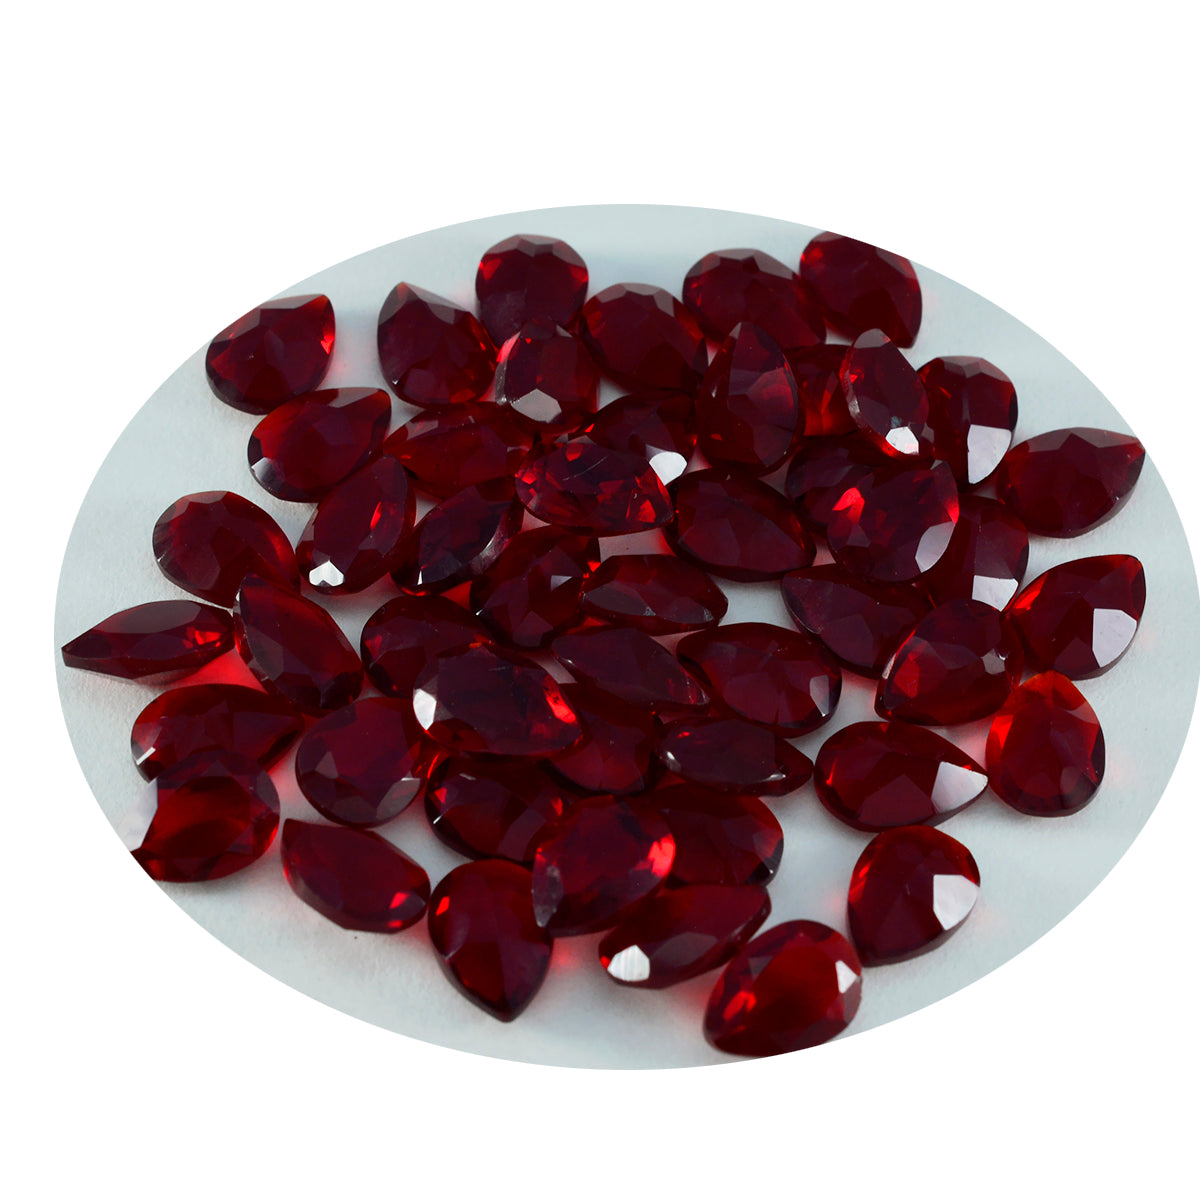 Riyogems 1PC Red Ruby CZ Faceted 4x6 mm Pear Shape superb Quality Gems